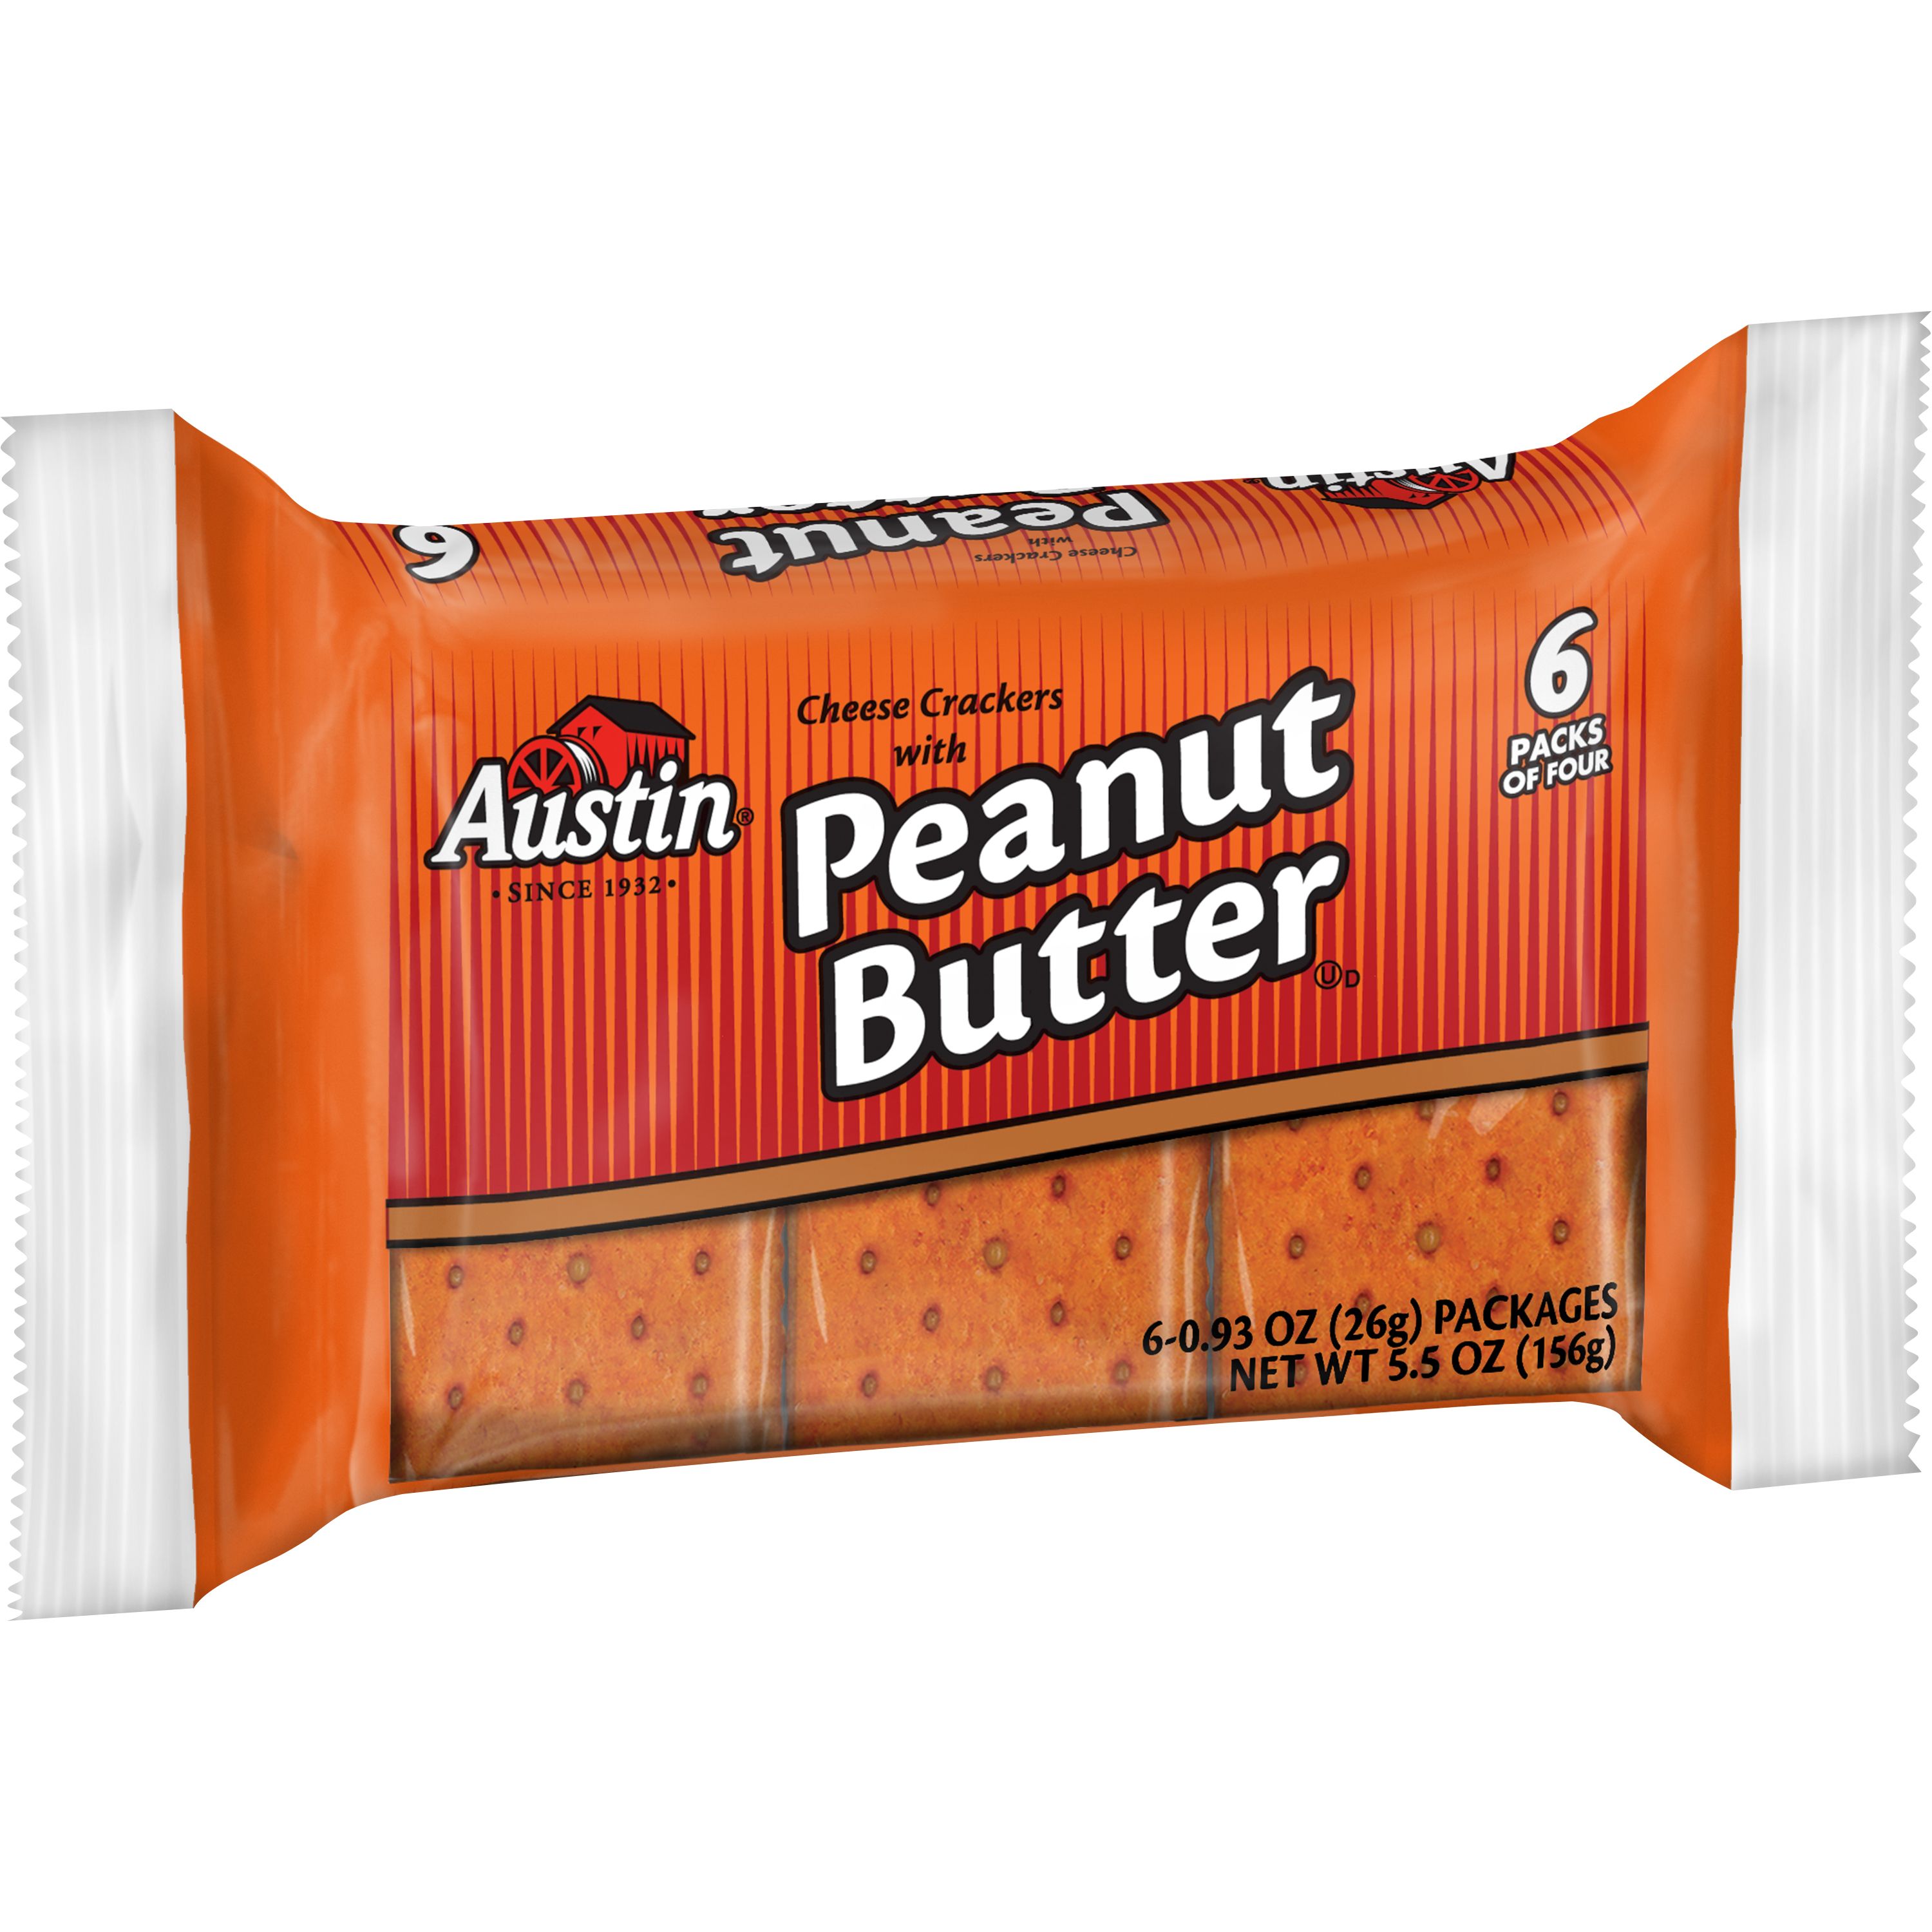 Austin® sandwich crackers Peanut Butter on Cheese SmartLabel™